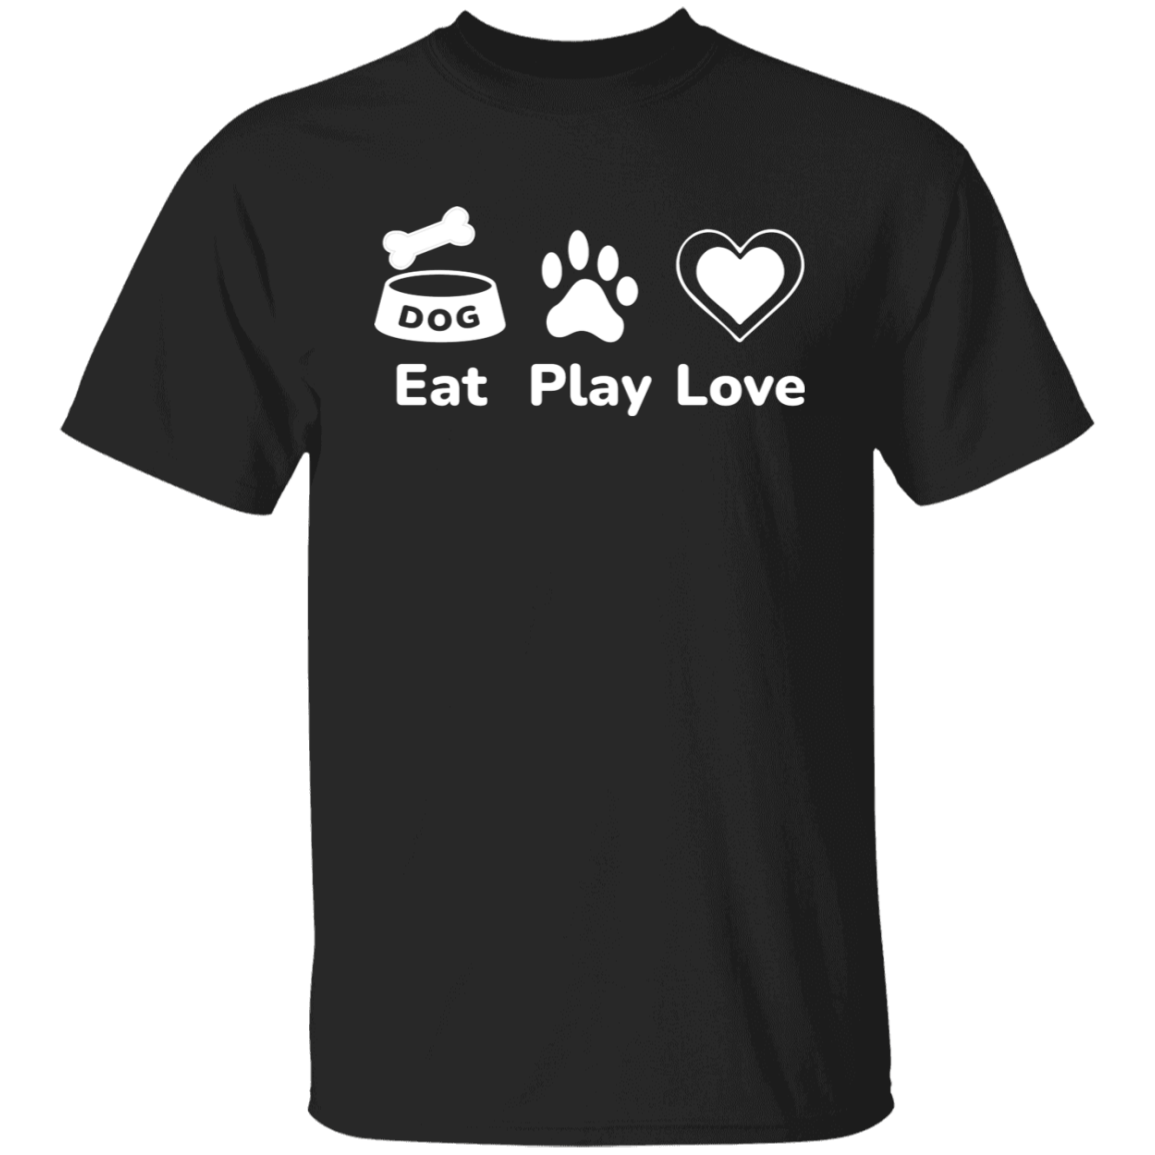 Eat Play Love - T Shirt.